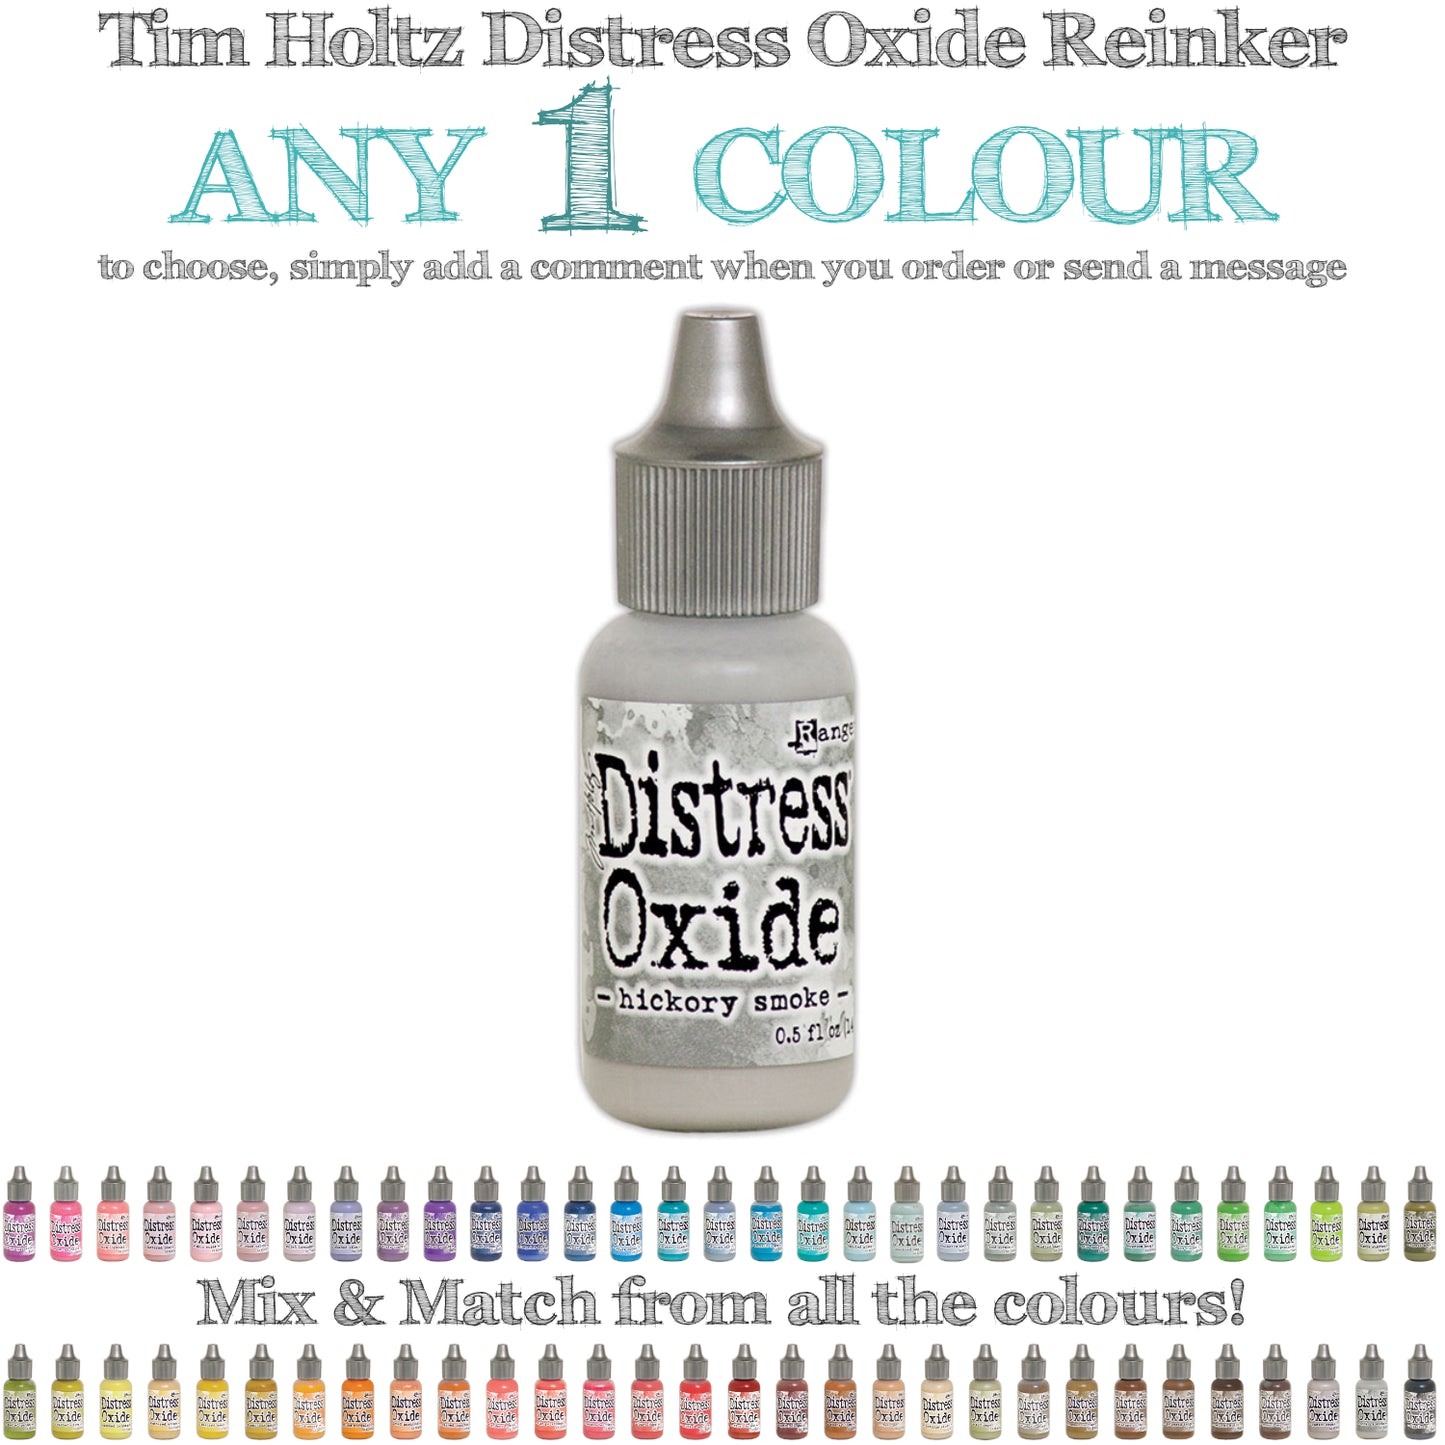 Tim Holtz Distress Oxide Reinker Inkpad Refill from  Ranger, for sale at Art by Jenny in Australia 